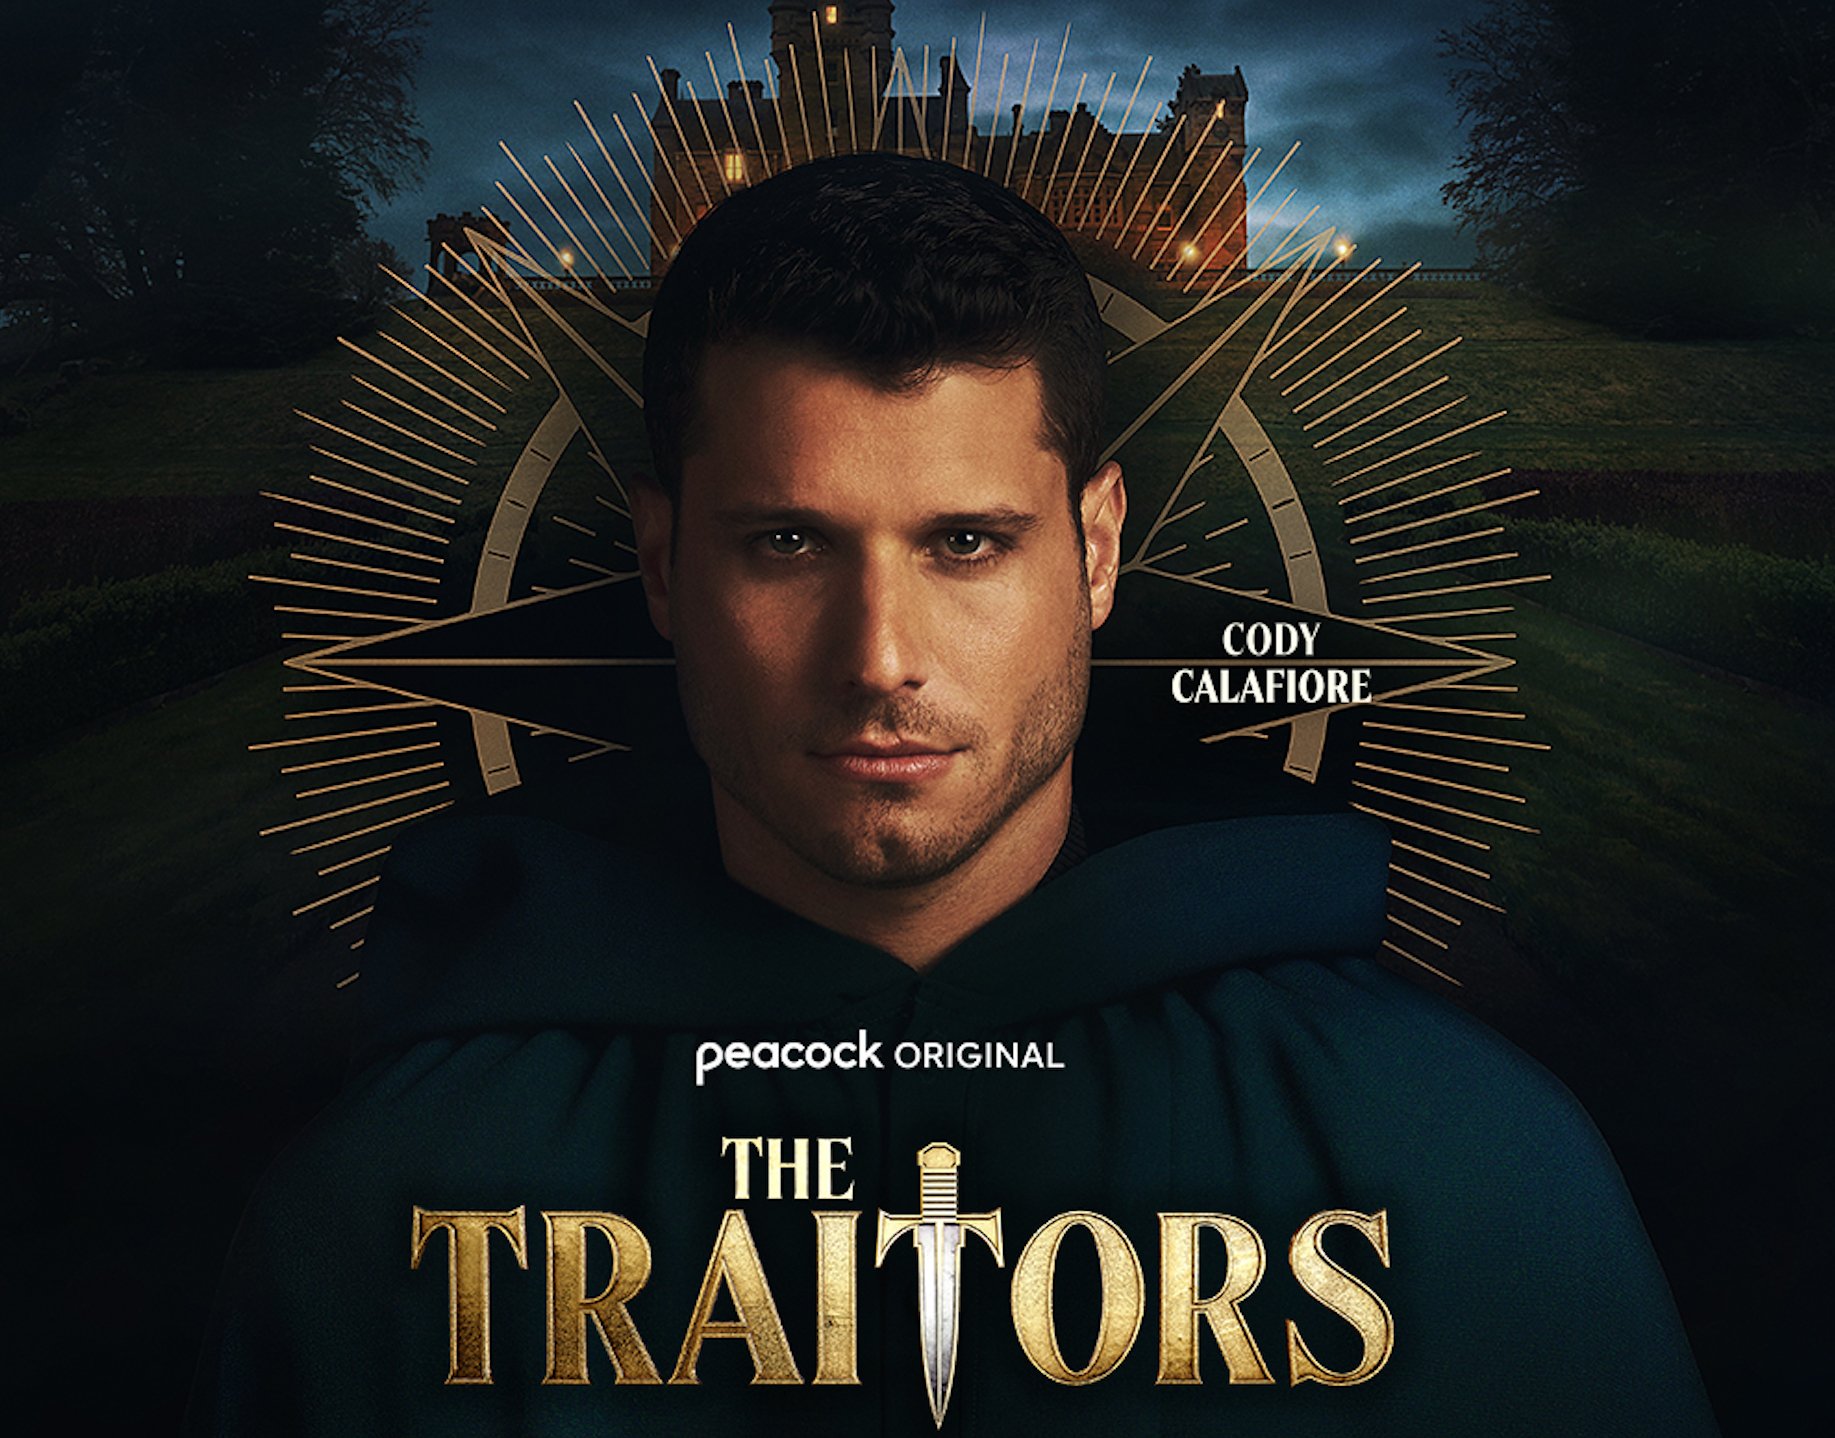 Cody Calafiore wears a clock for 'The Traitors'.